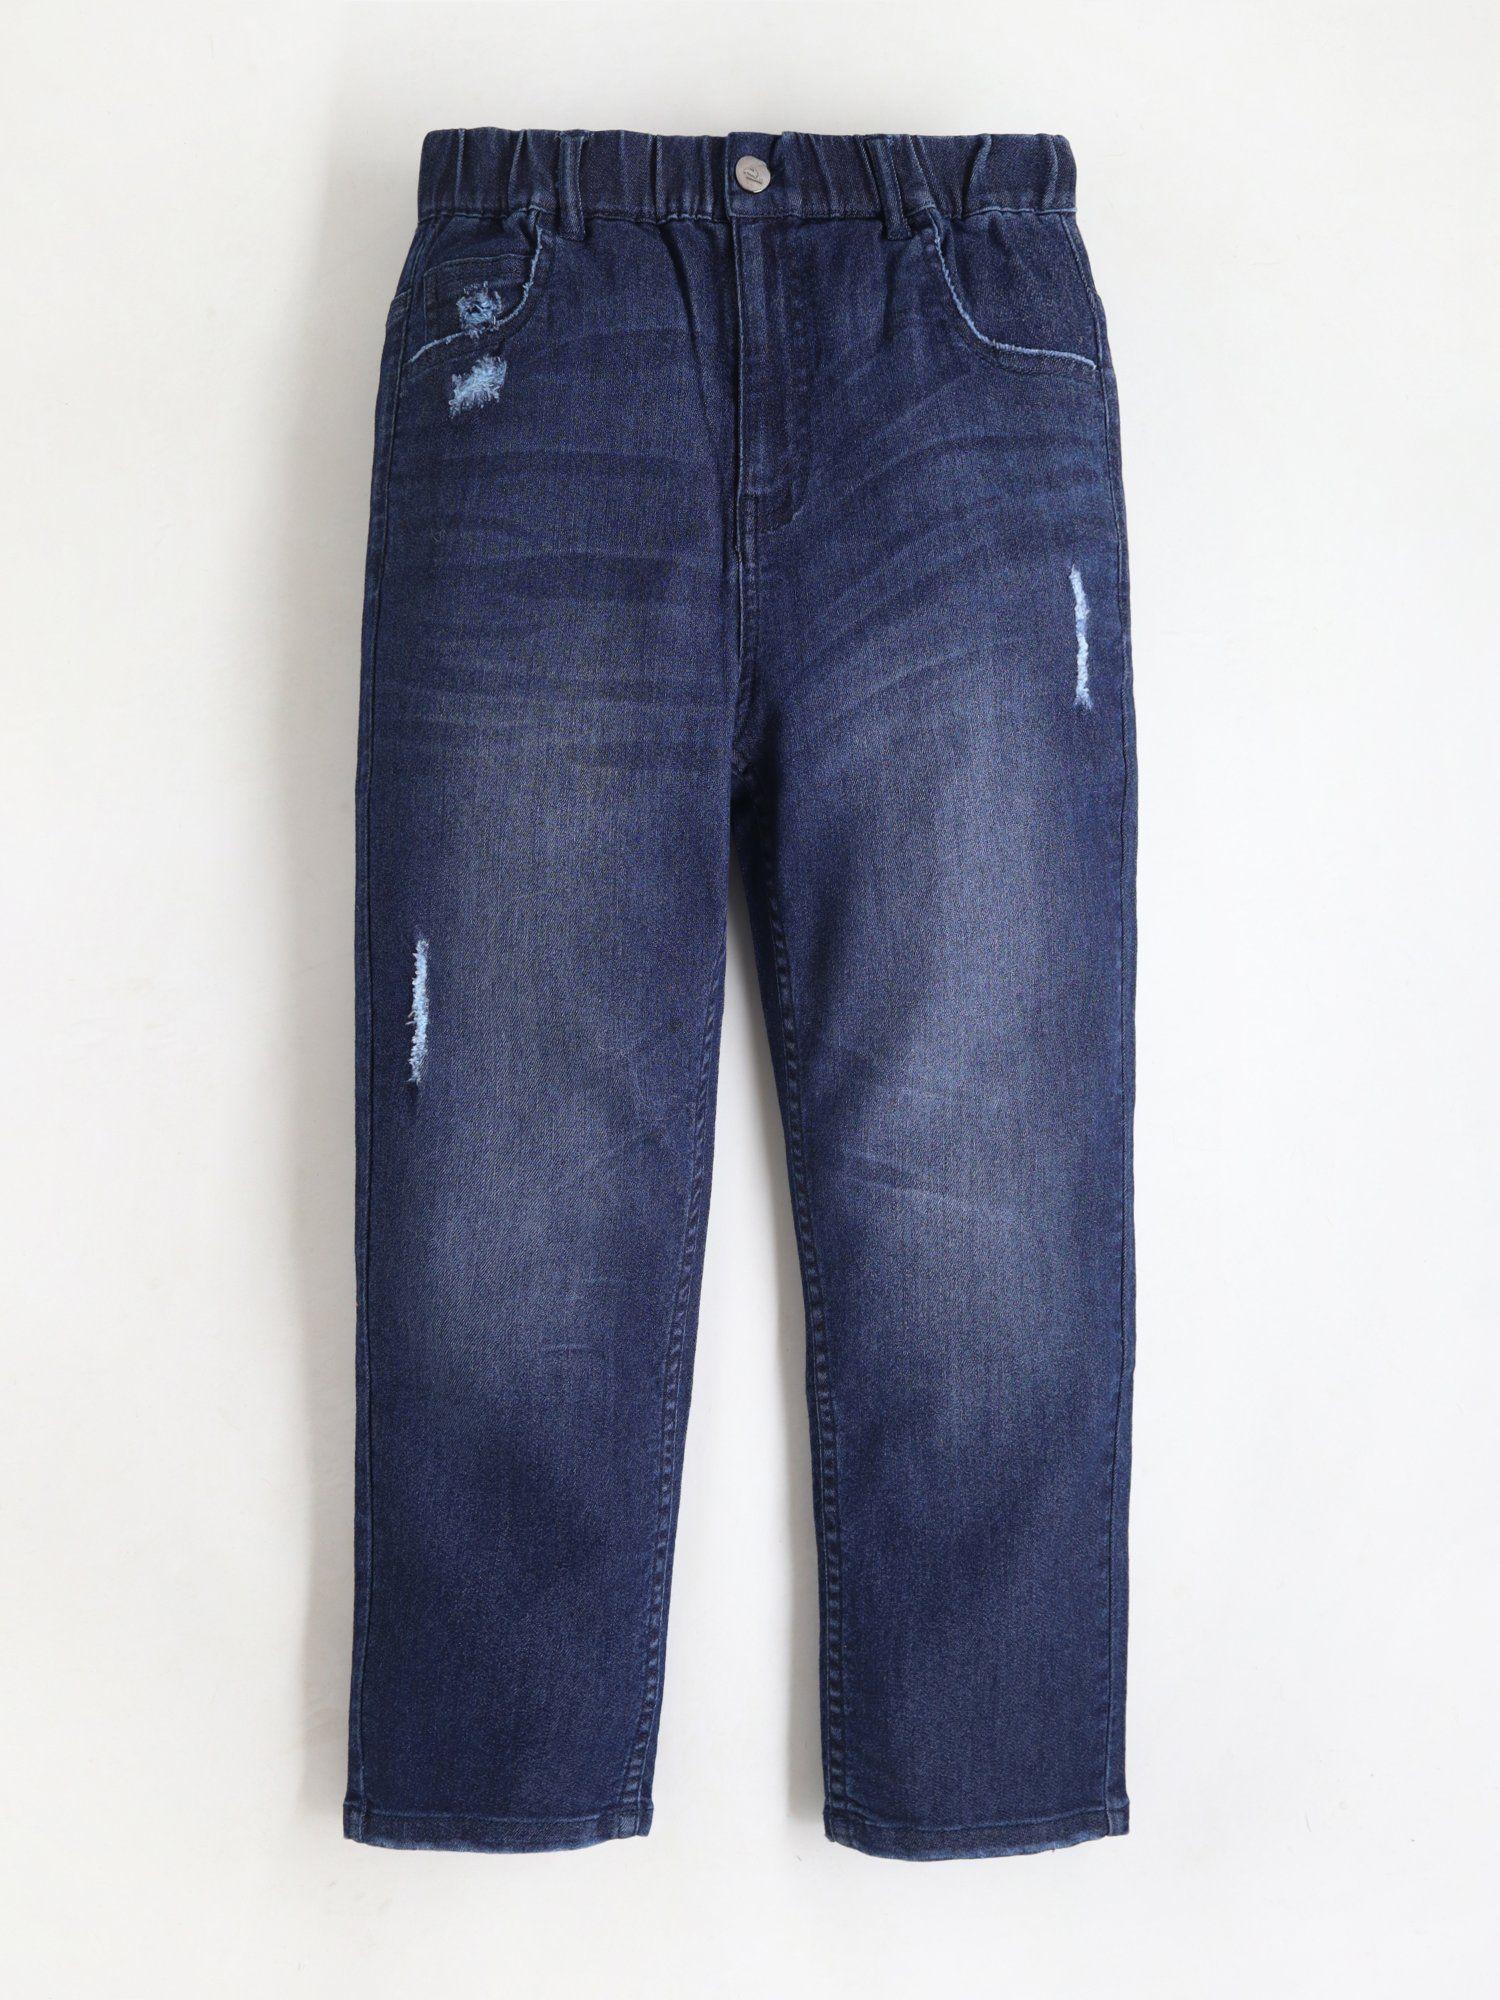 stylish navy blue unisex denim stretchable jeans